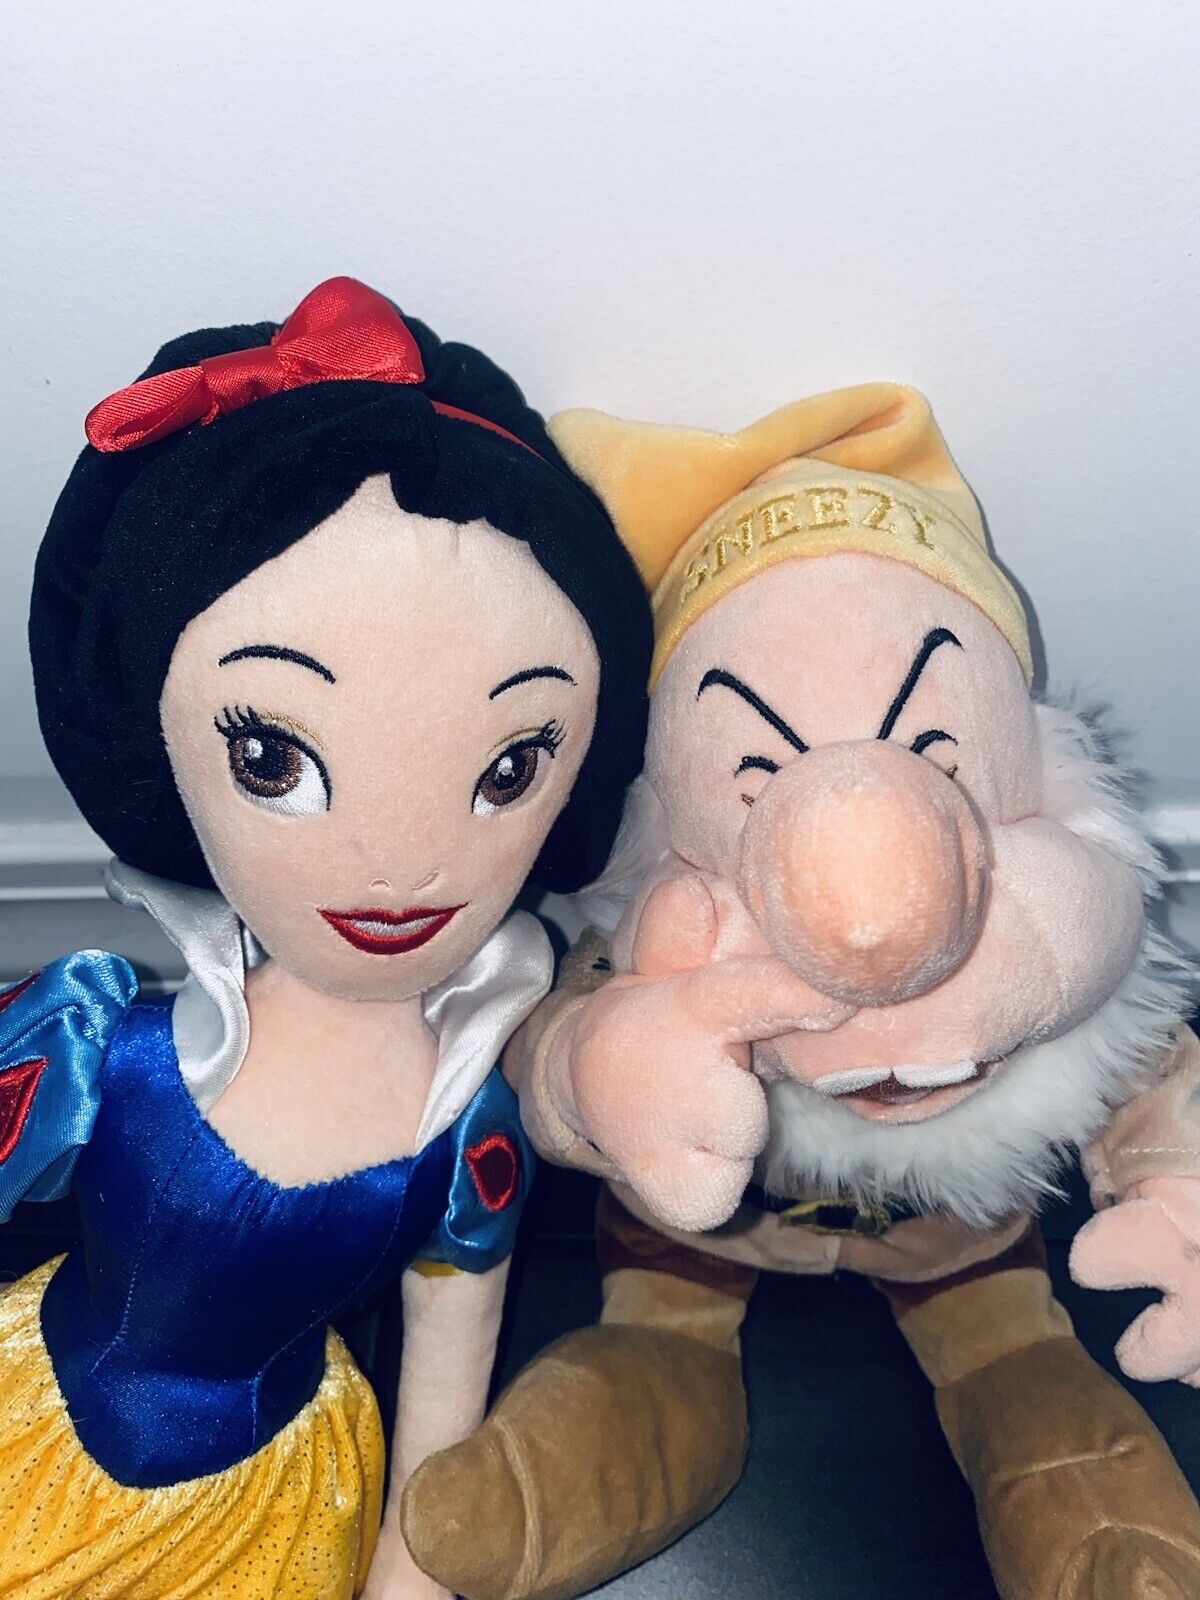 x2 Lot Sneezy & Snow White Seven Dwarfs Plush Stuffed Toy Doll Disney Store Park